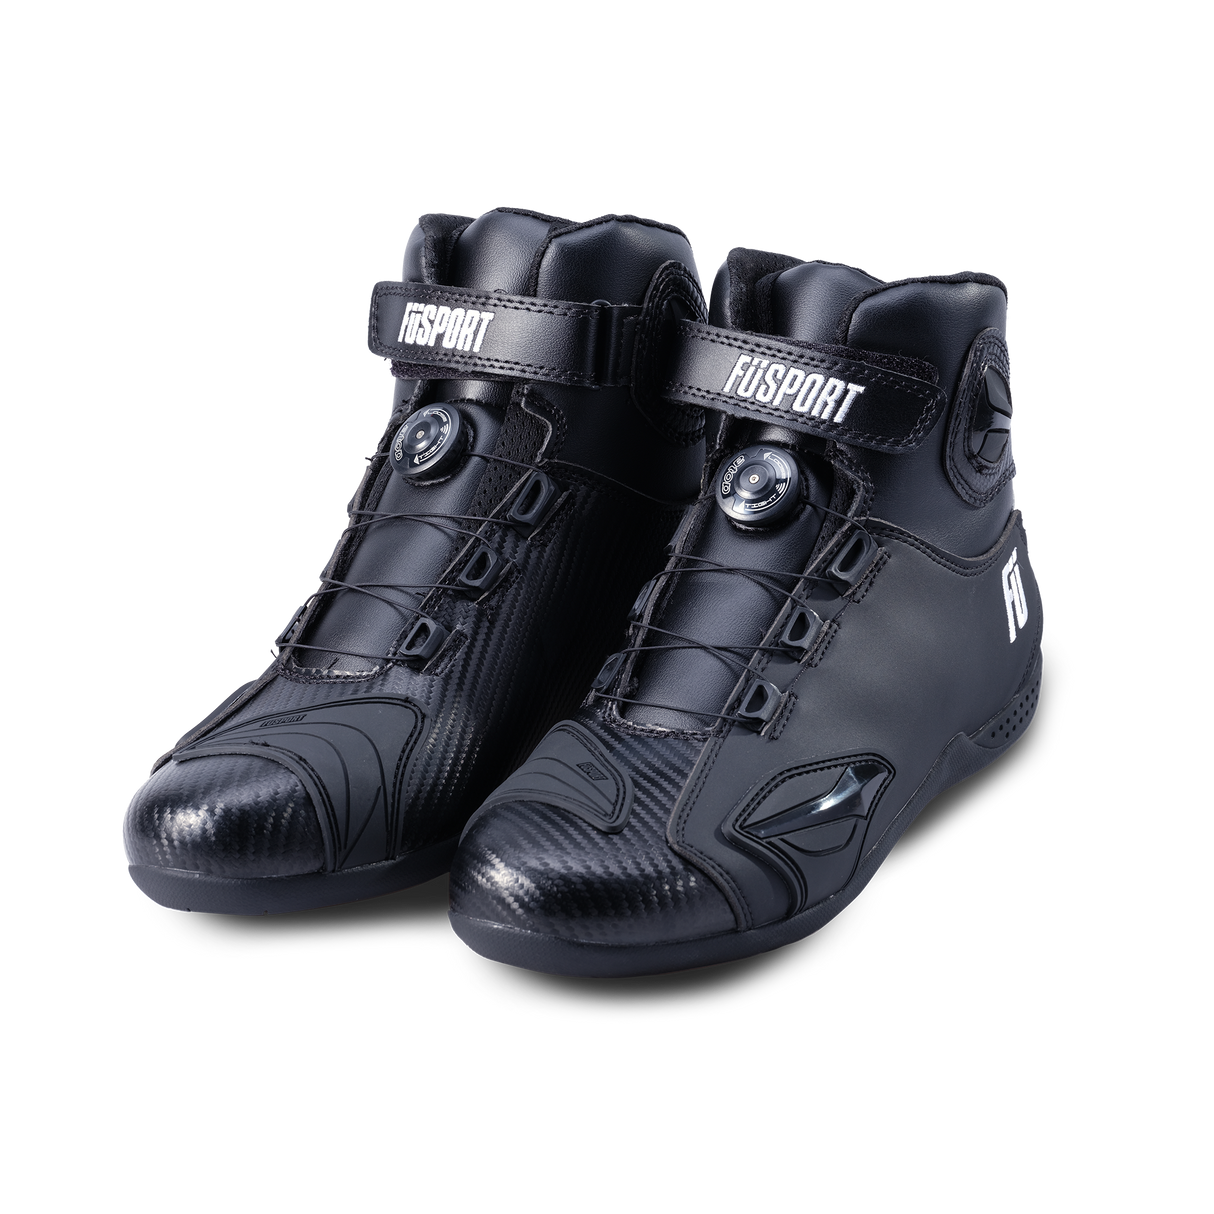 Fusport Phantom Boots - Black